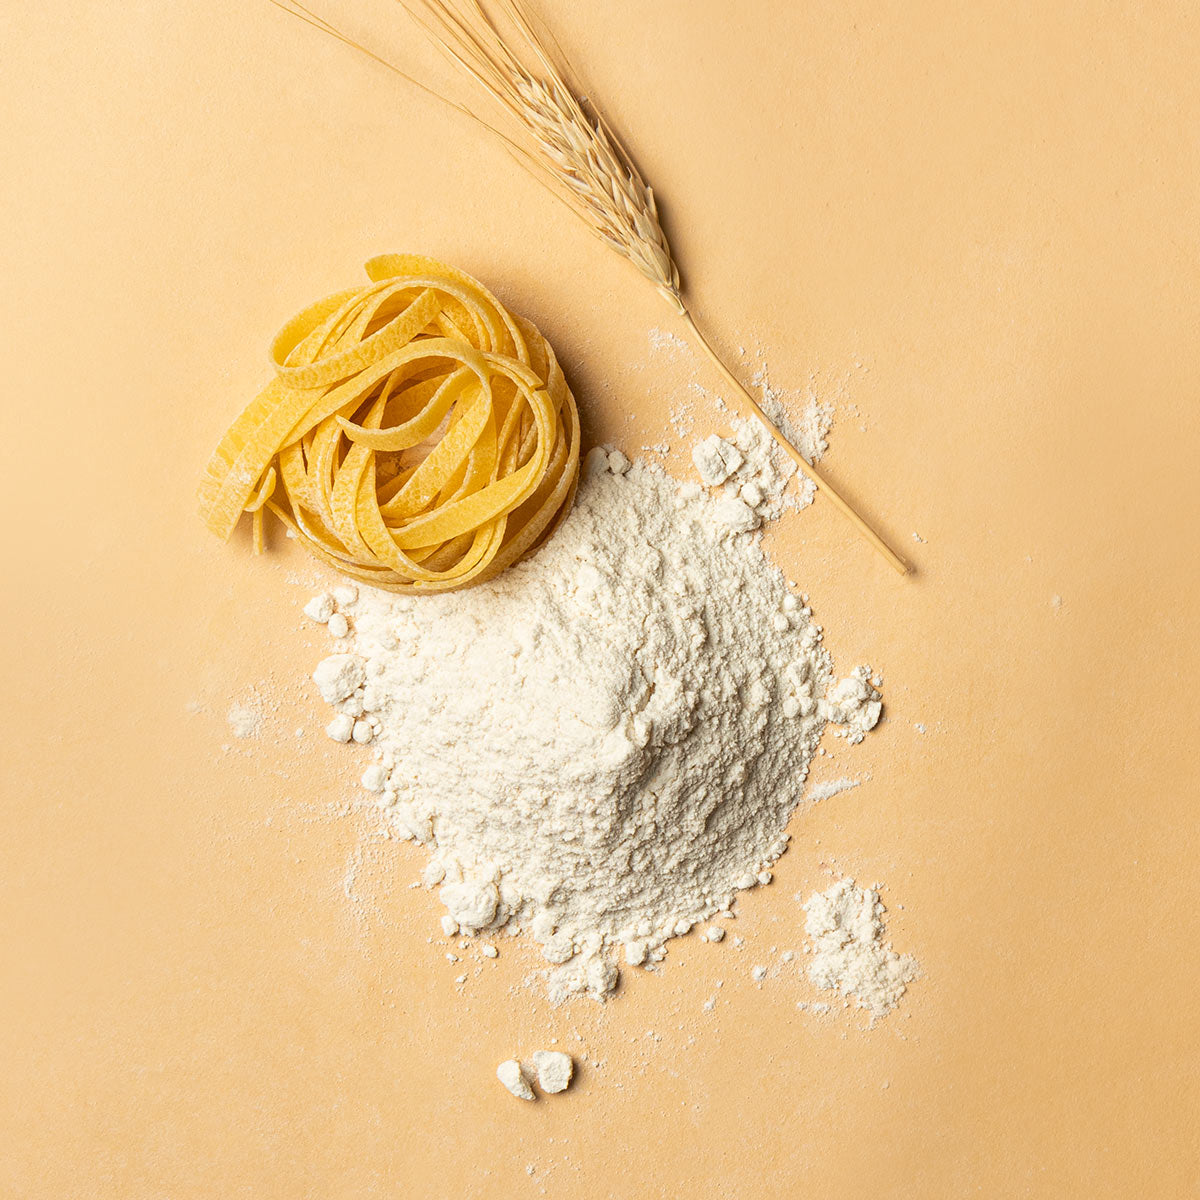 Italian Type 1 Soft Wheat Flour